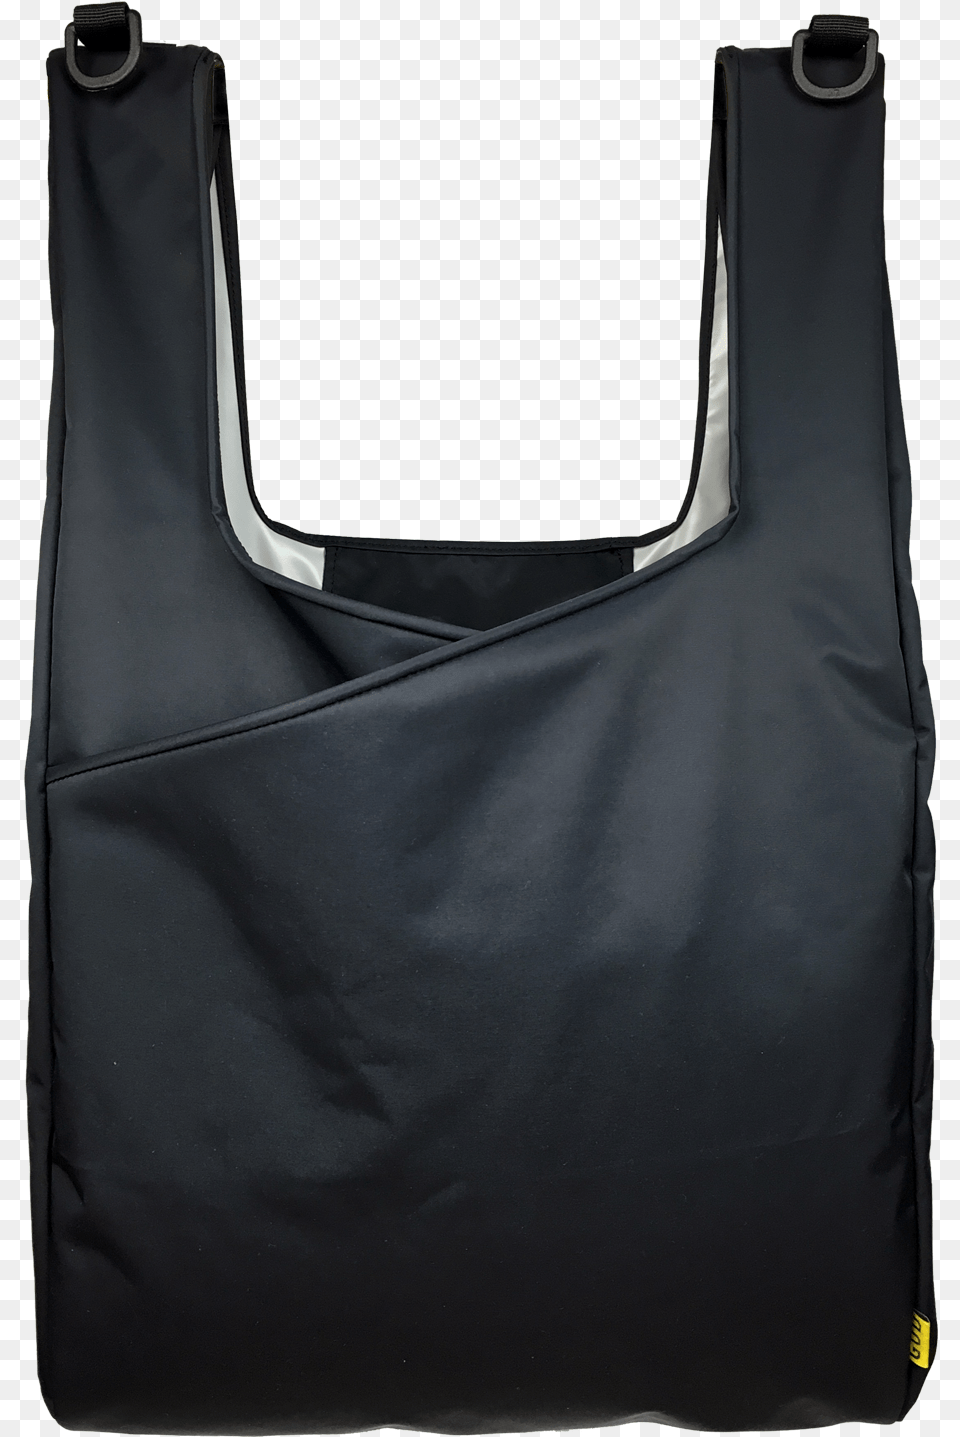 Optimized Gud Compras Tote Bag Dark Navy Face Handbag, Tote Bag, Accessories, Shopping Bag Png Image